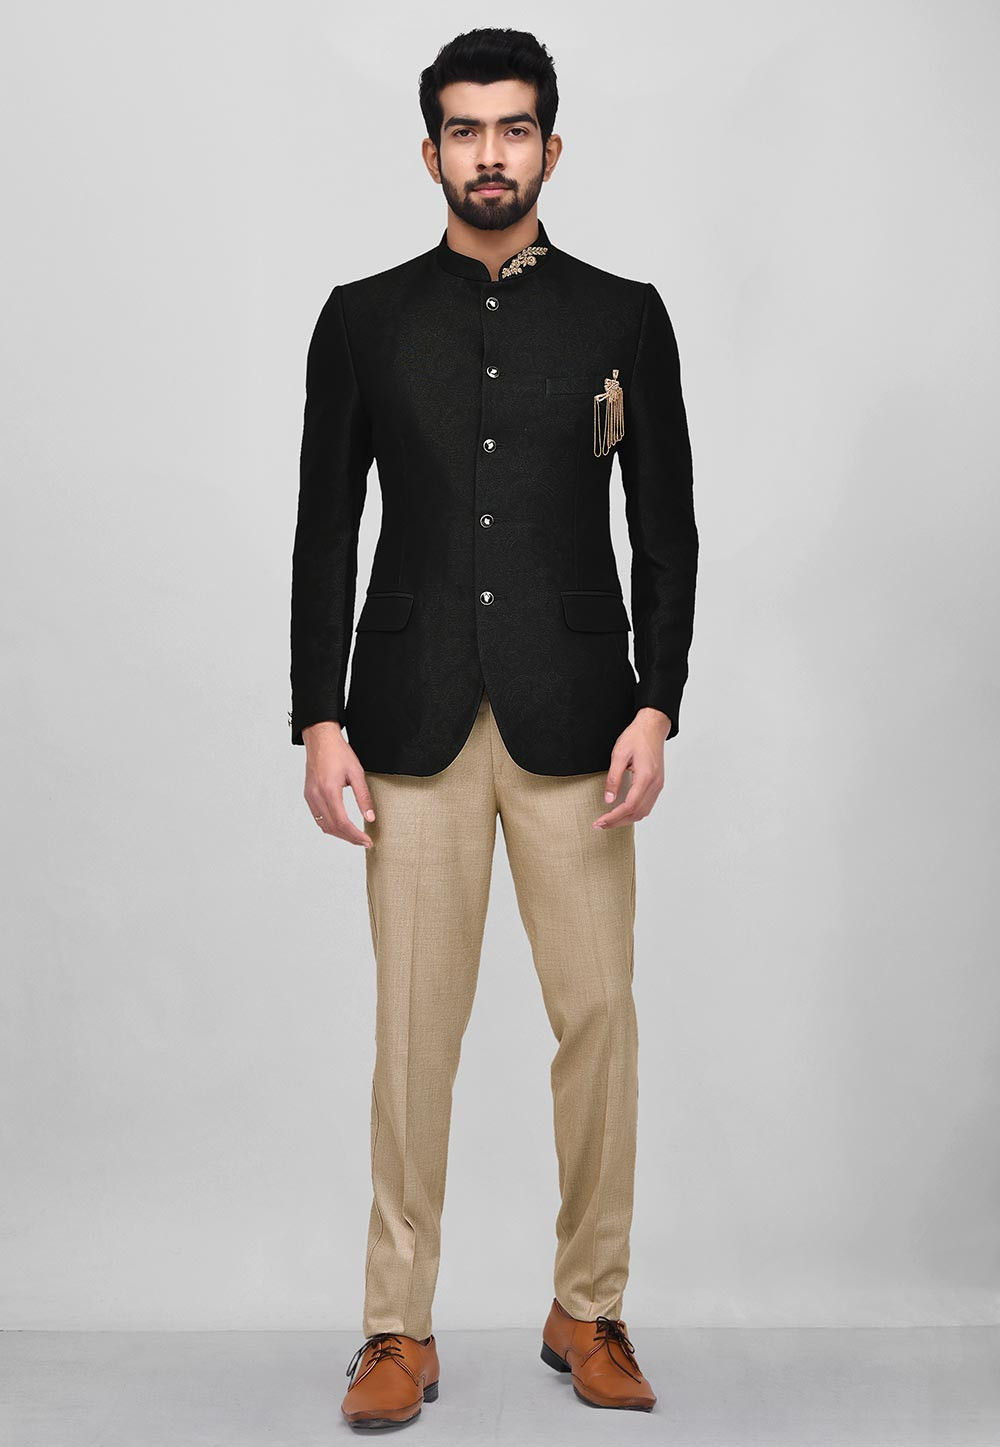 Buy Embroidered Art Silk Jodhpuri Suit in Black Online : MTX1179 ...